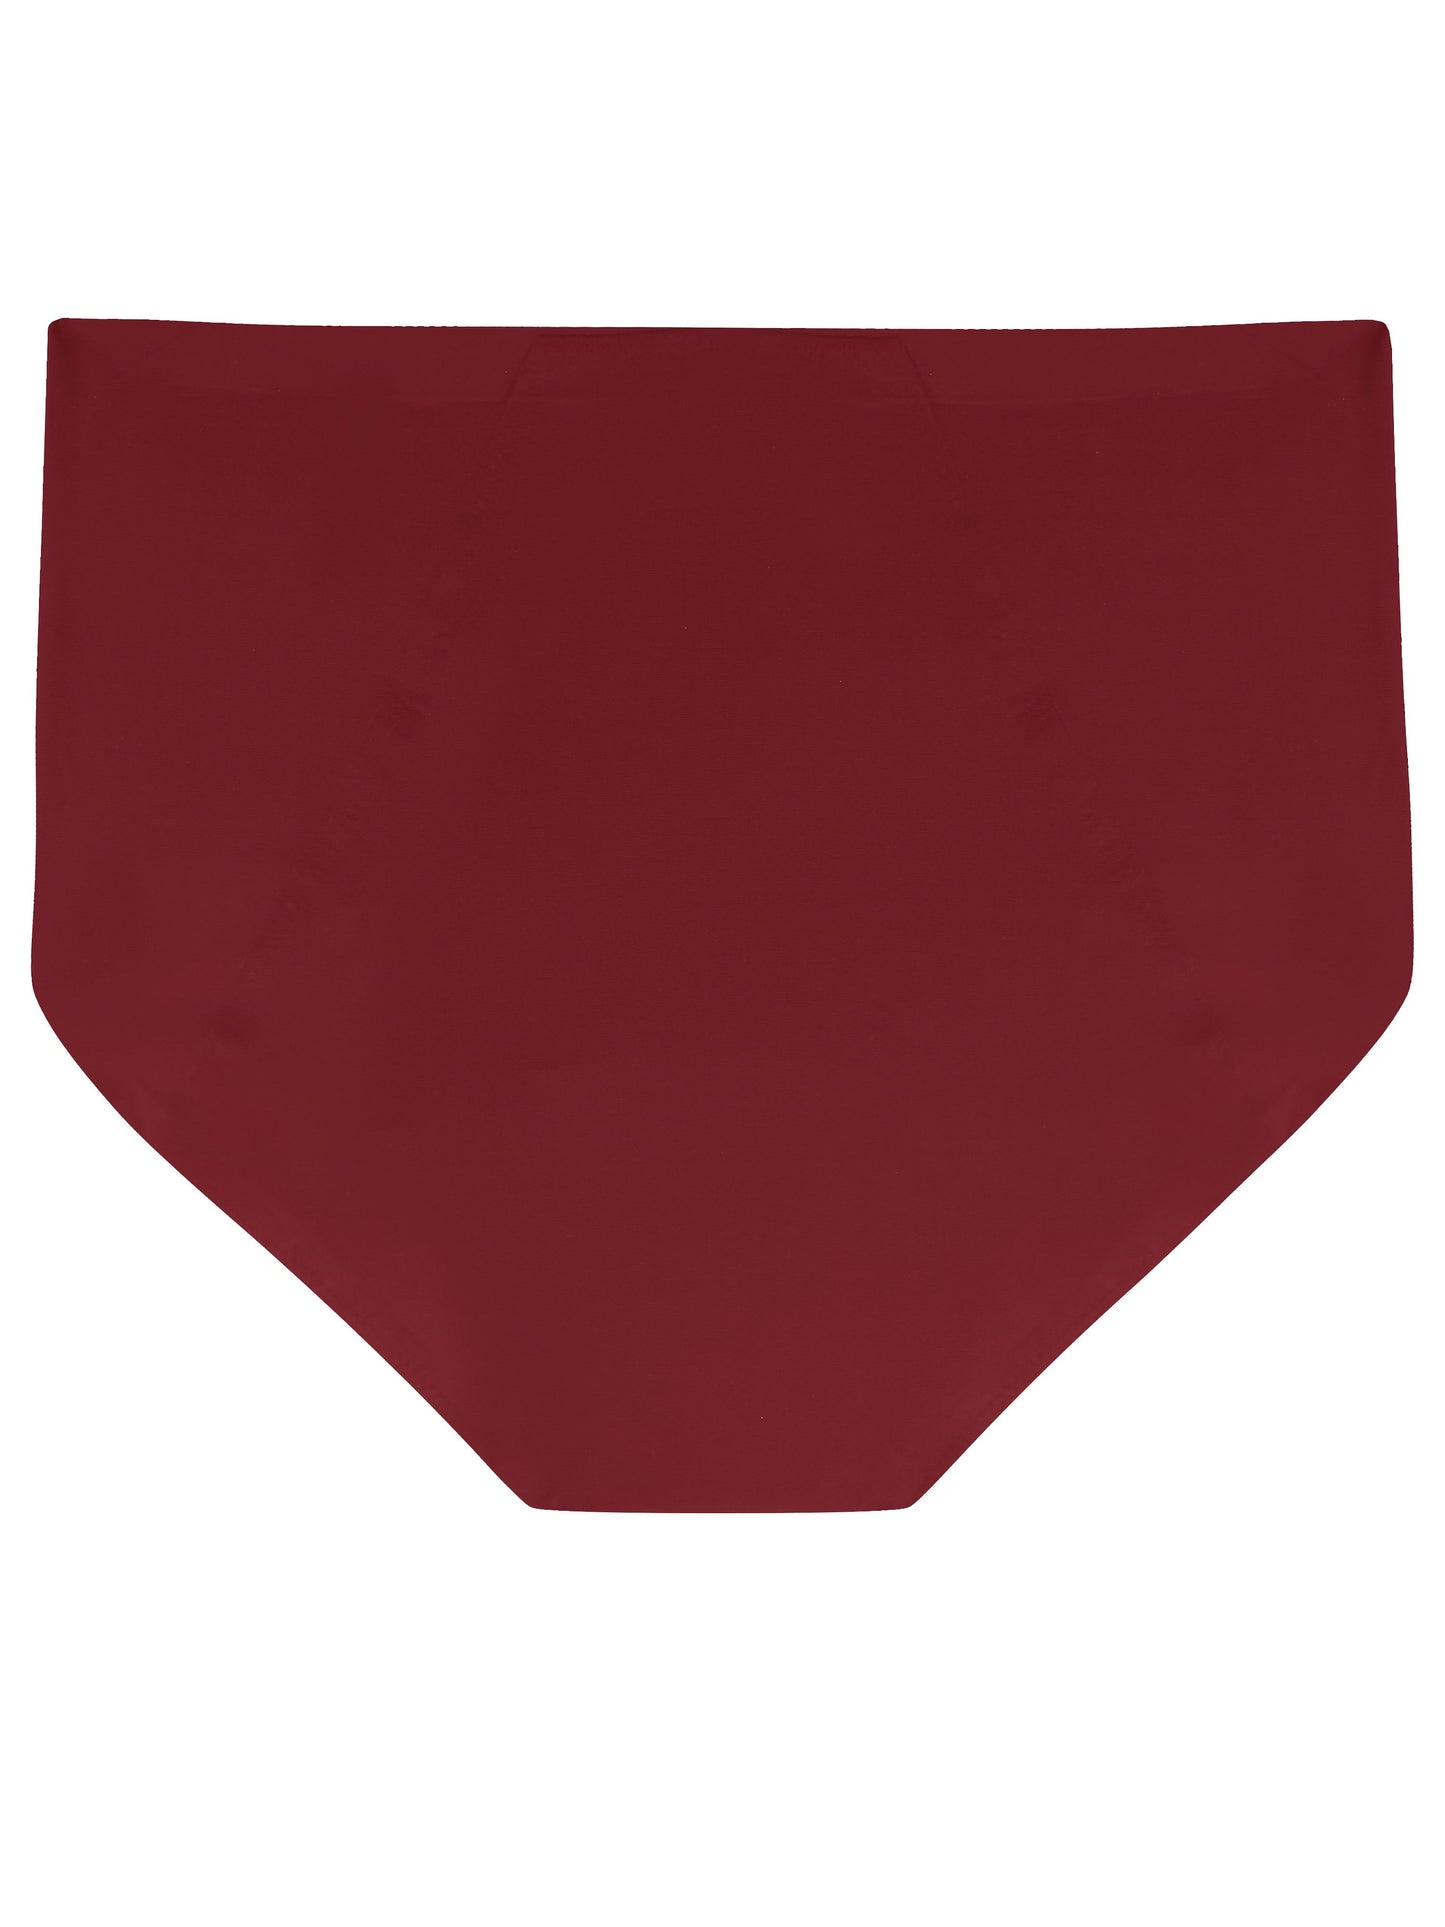 Imaara Feminine Period Underwear Inclusive Knickers. Product Serma Rhubarb